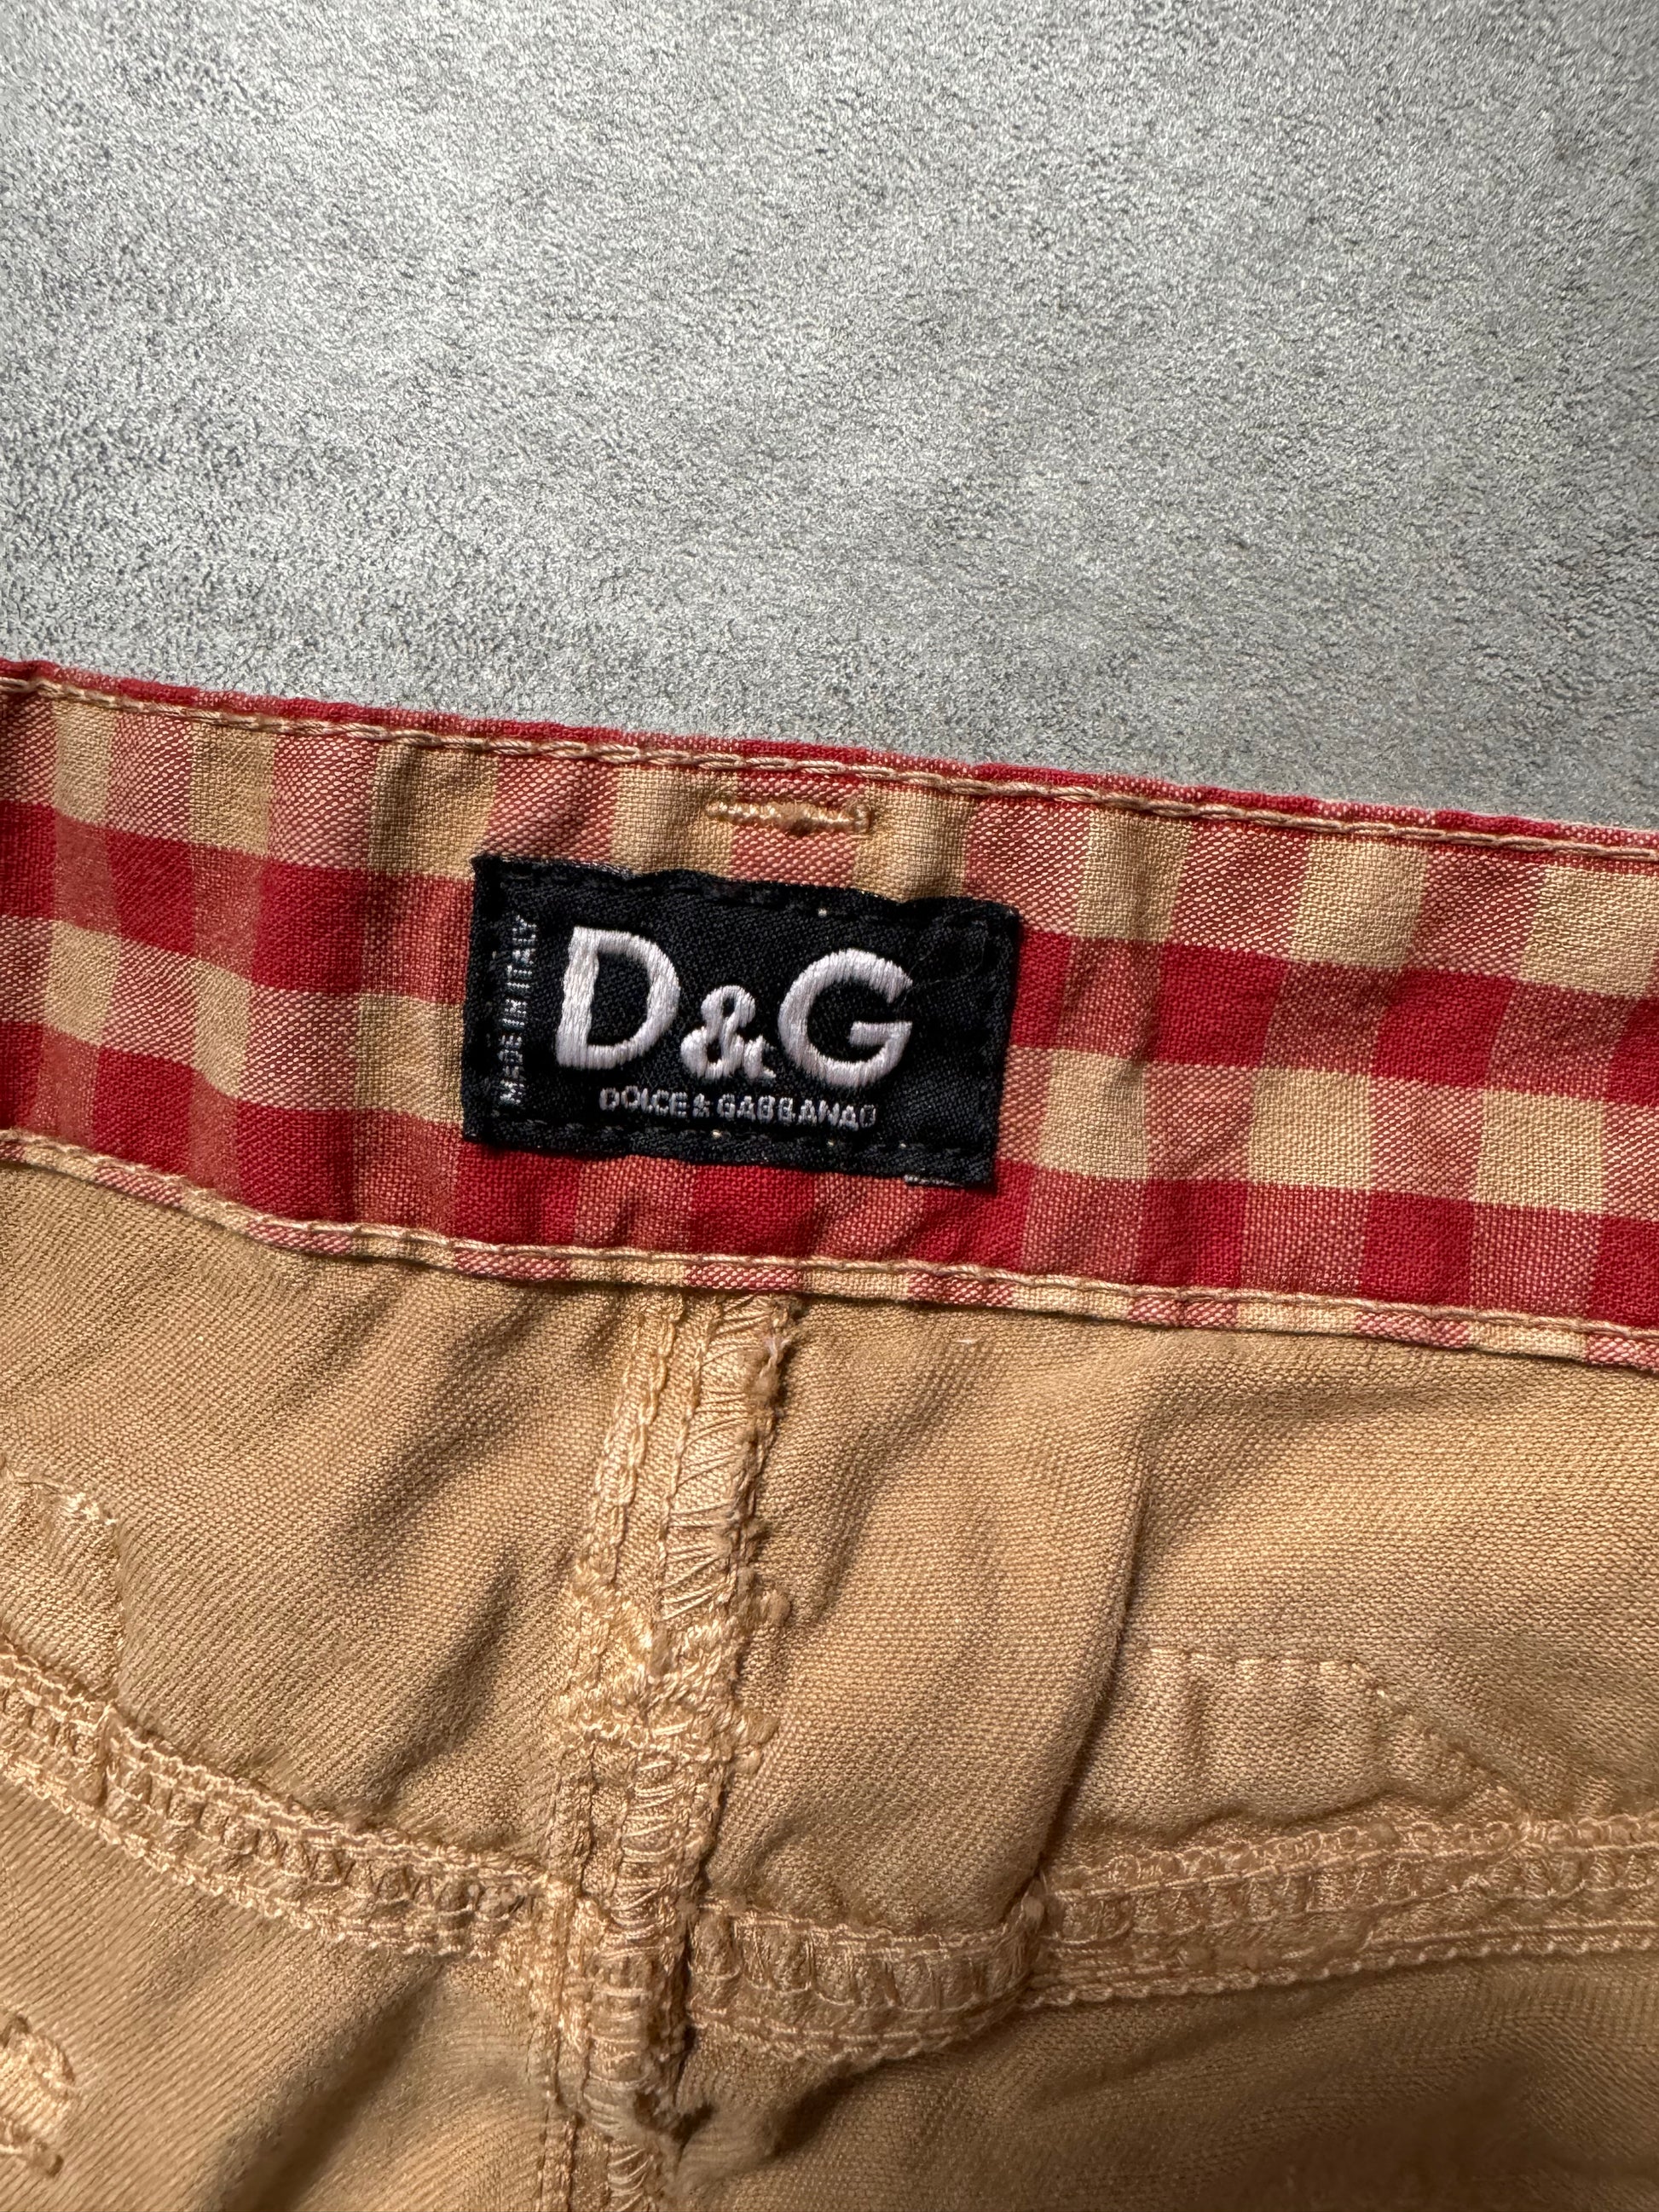 SS2003 Dolce & Gabbana Beige Cargo Utility Pants (L) - 11